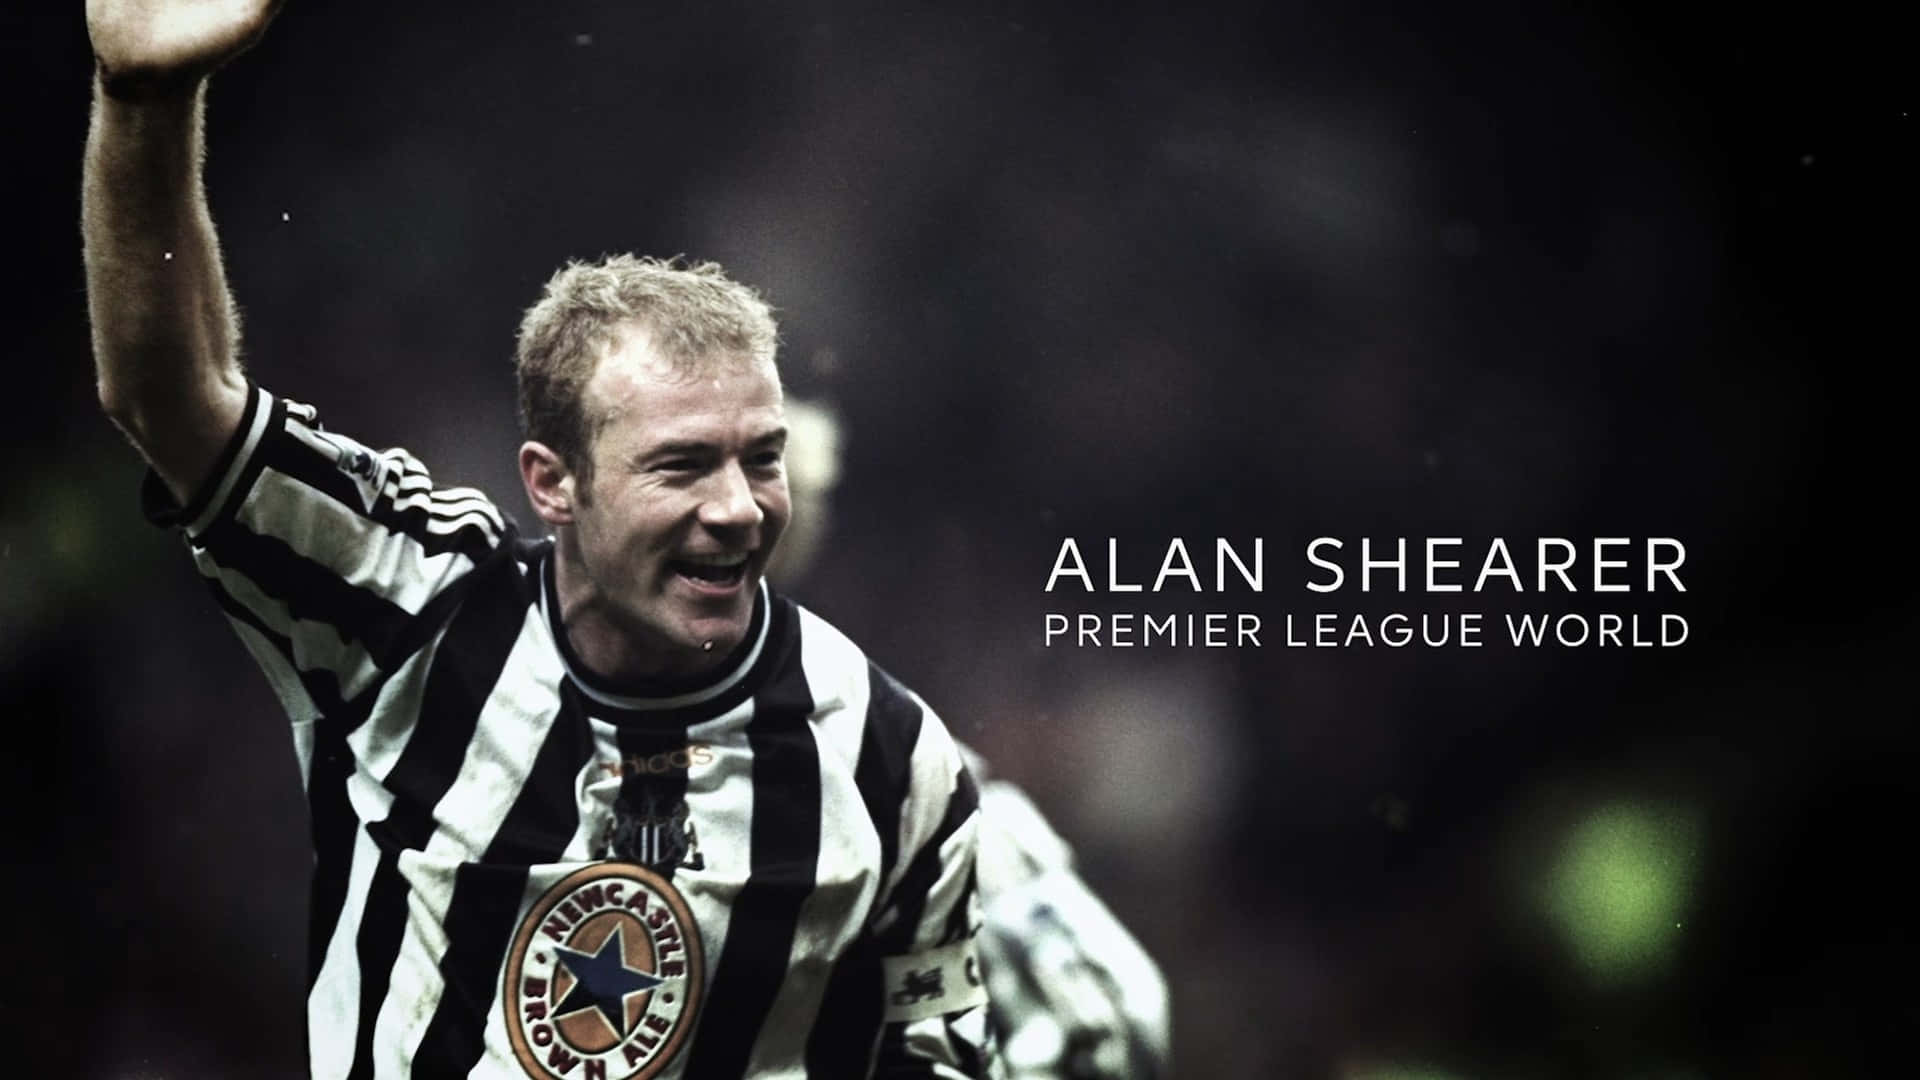 Caption: Legendary football star, Alan Shearer in his Premier League glory days. Wallpaper